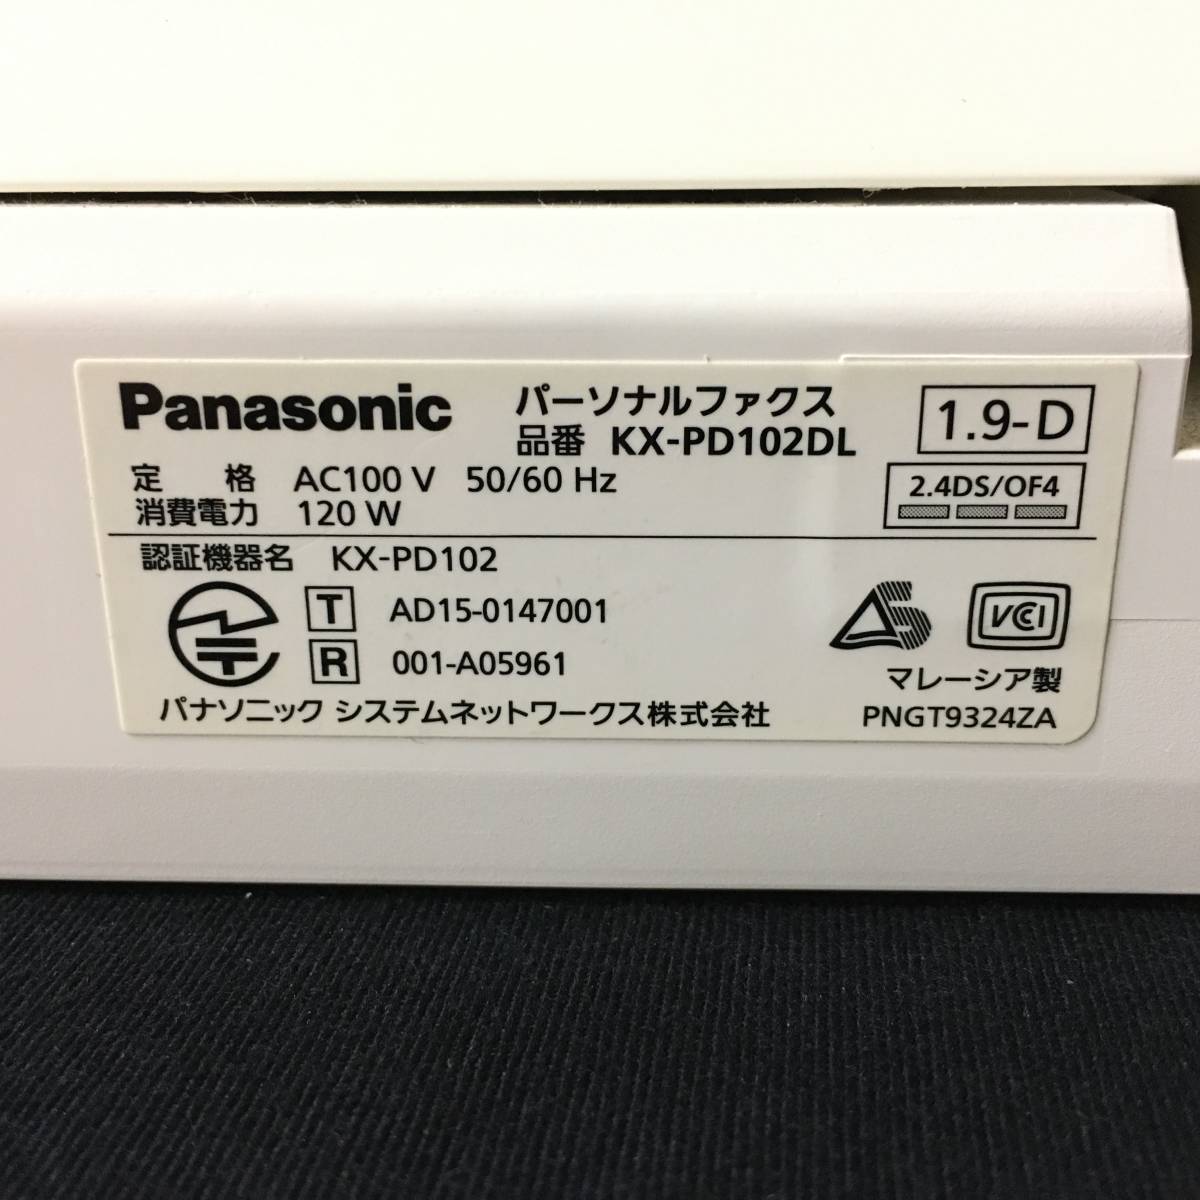 Panasonic ファックス 子機付き KX-PD102DL パナソニック パーソナル